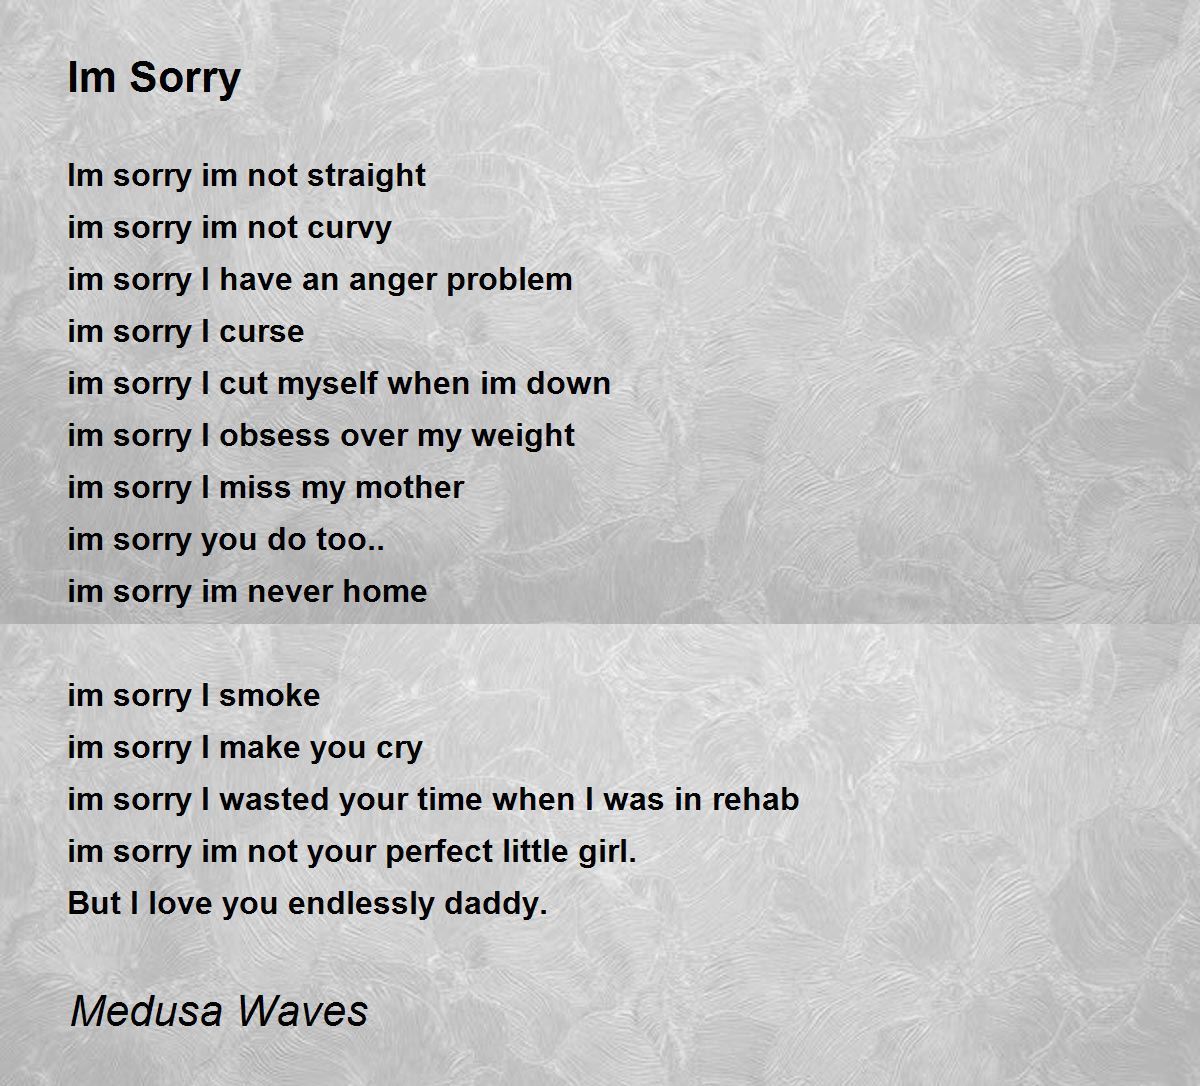 Im Sorry - Im Sorry Poem by Medusa Waves